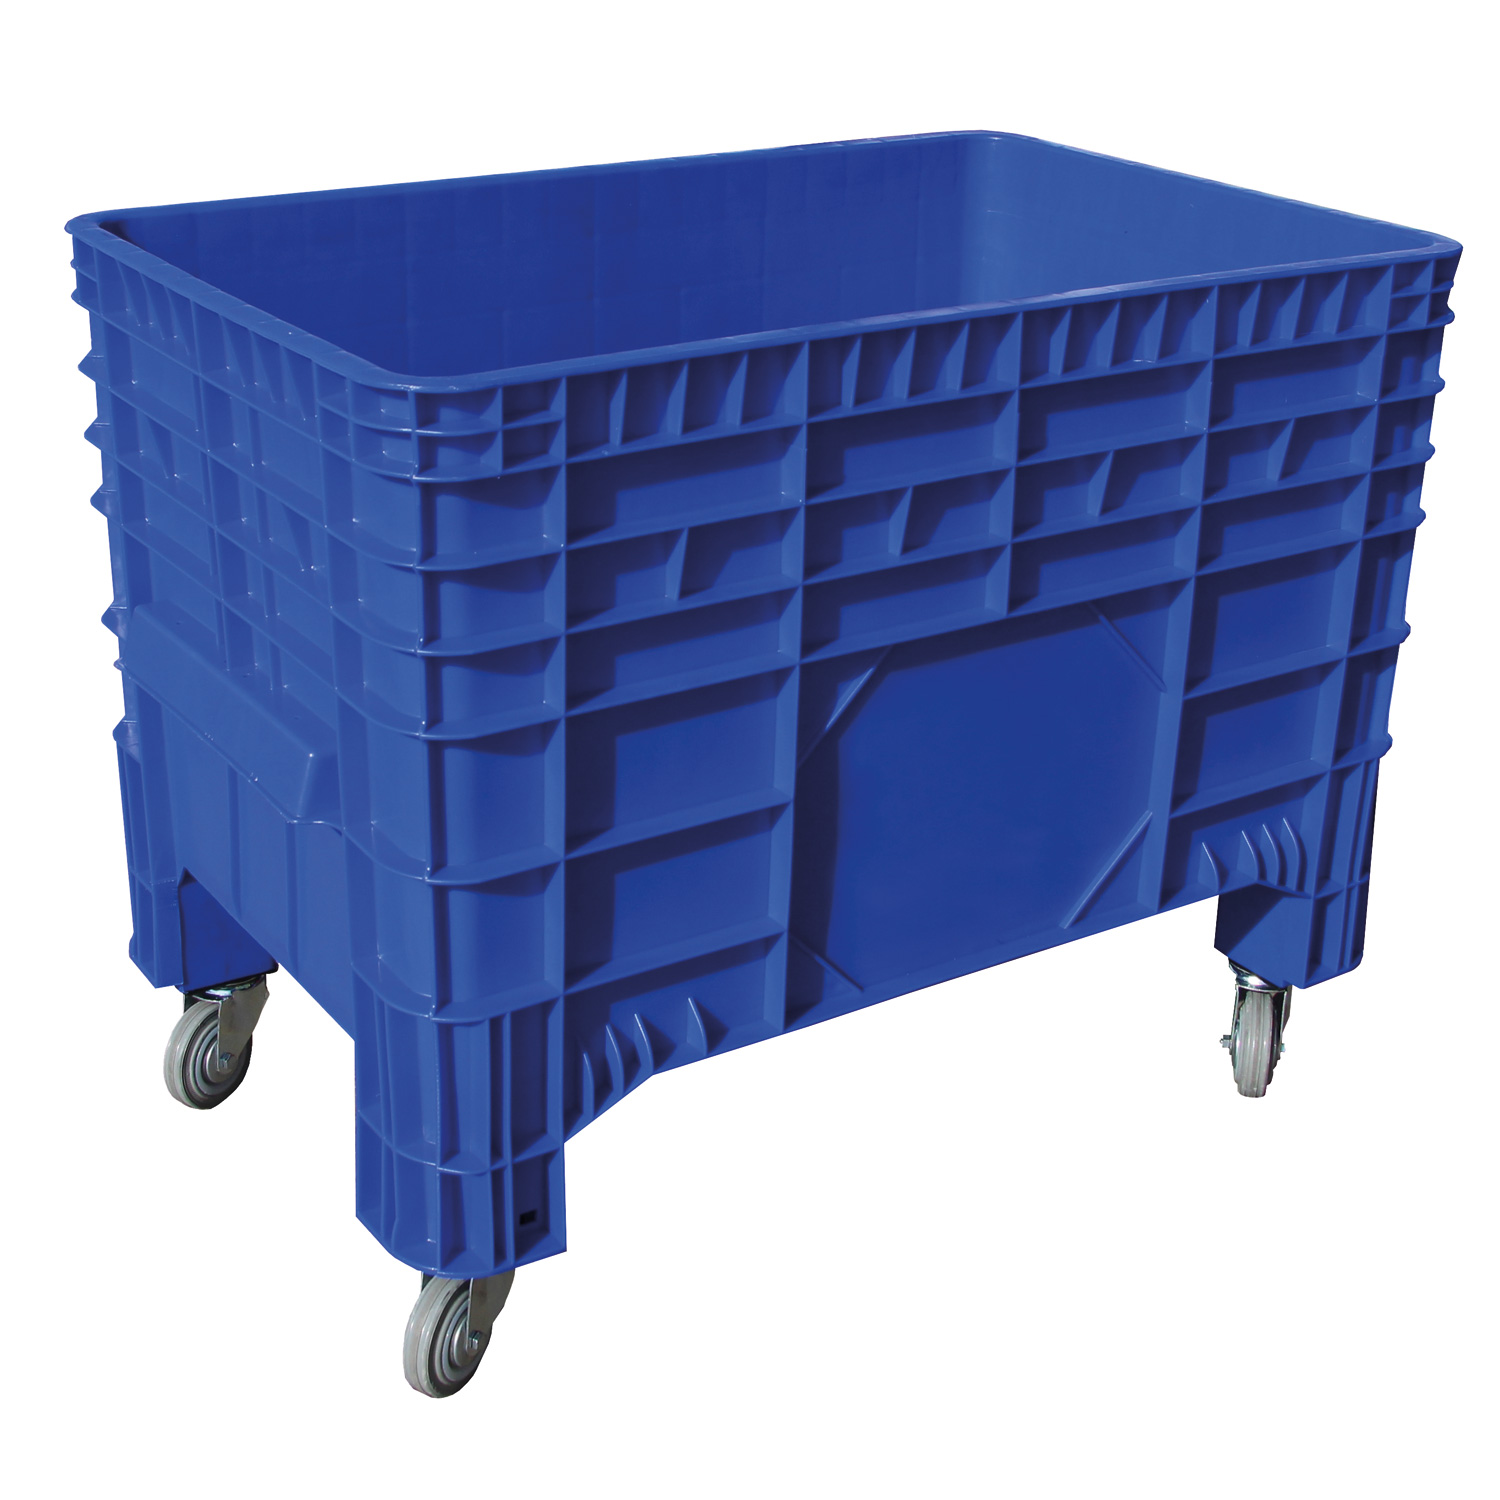 Großbehälter aus Polyethylen, 1040x640x780mm, HDPE, DUNKELBLAU, Inhalt: 285 Liter, 4 Gummi-Lenkrollen | VE = 1 Stk.